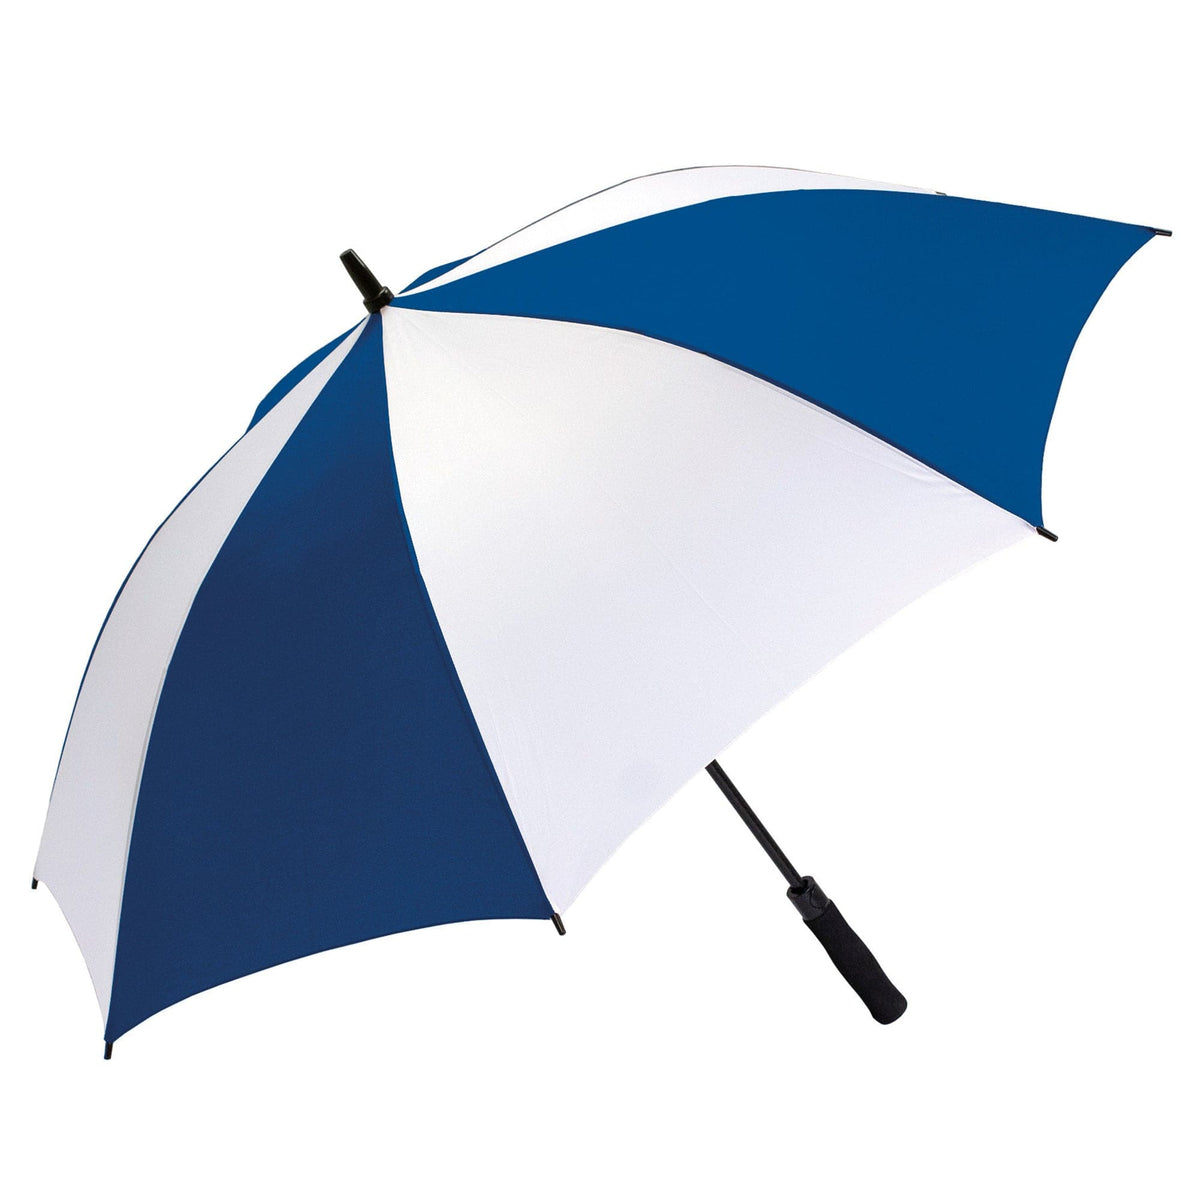 Haas-Jordan Zeus Umbrella